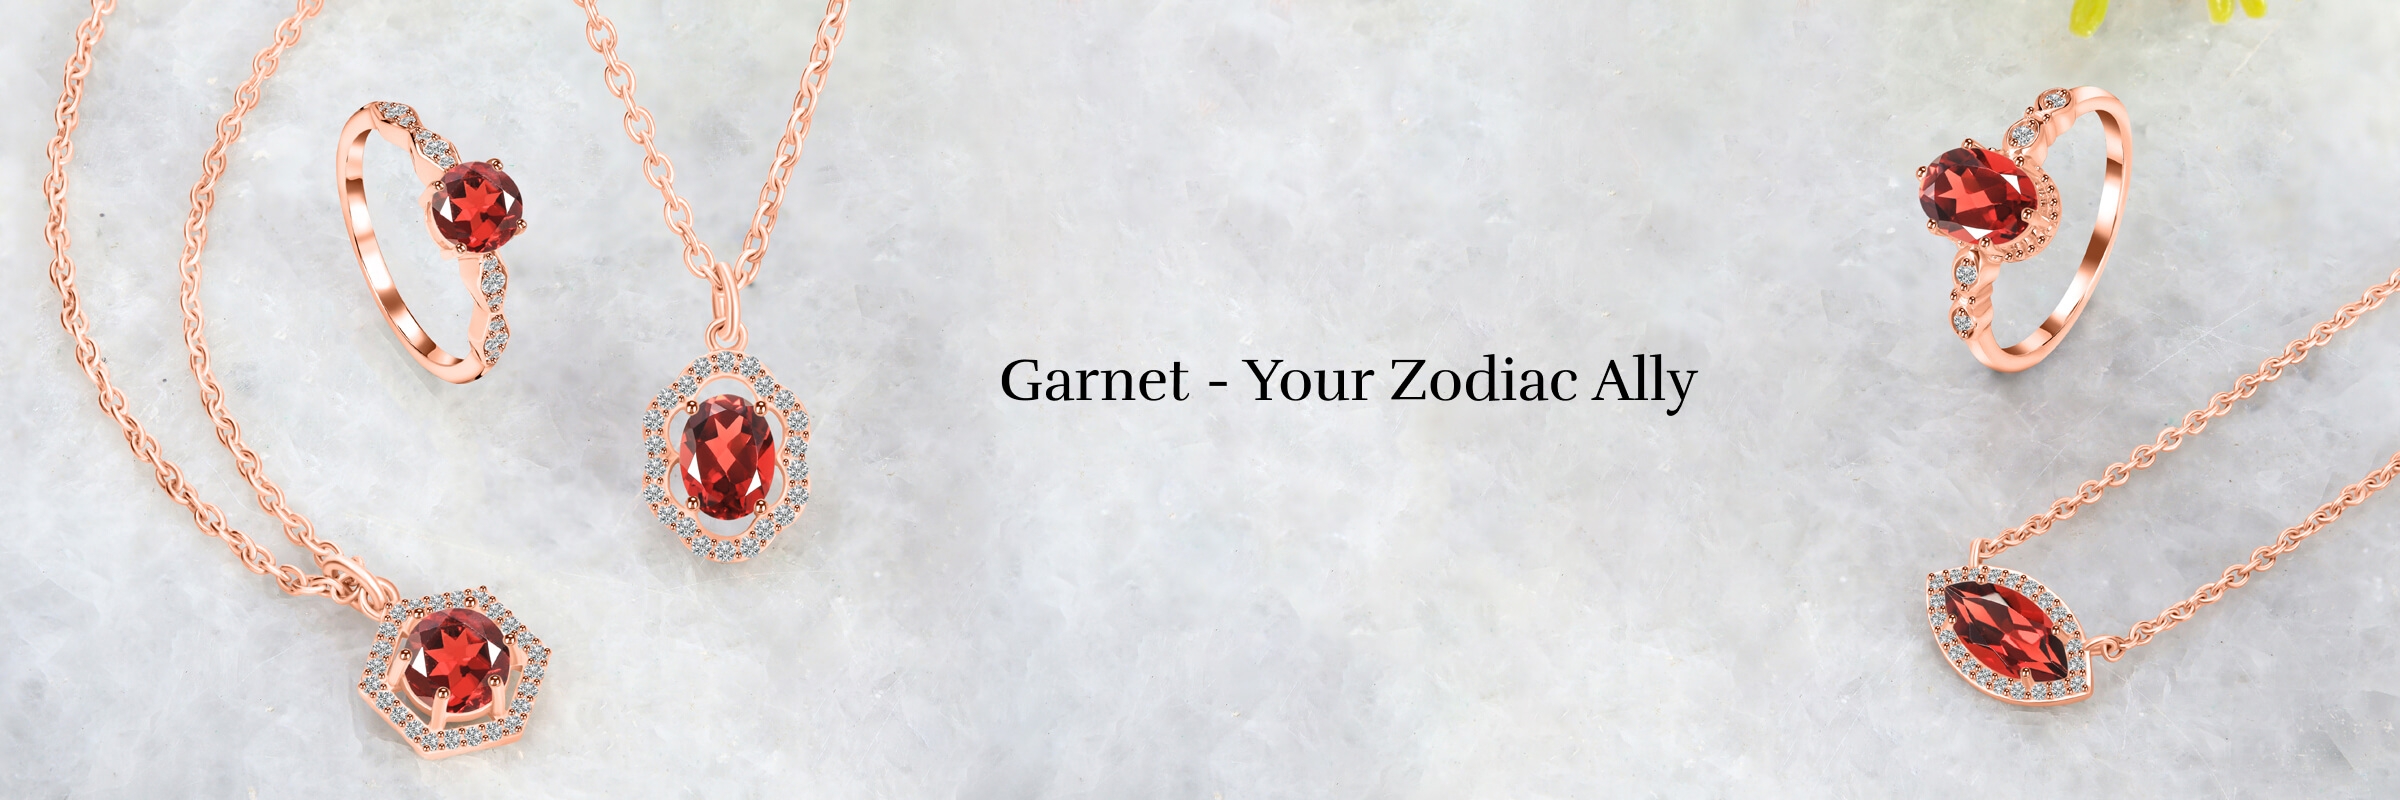 Zodiac sign associated with Garnet